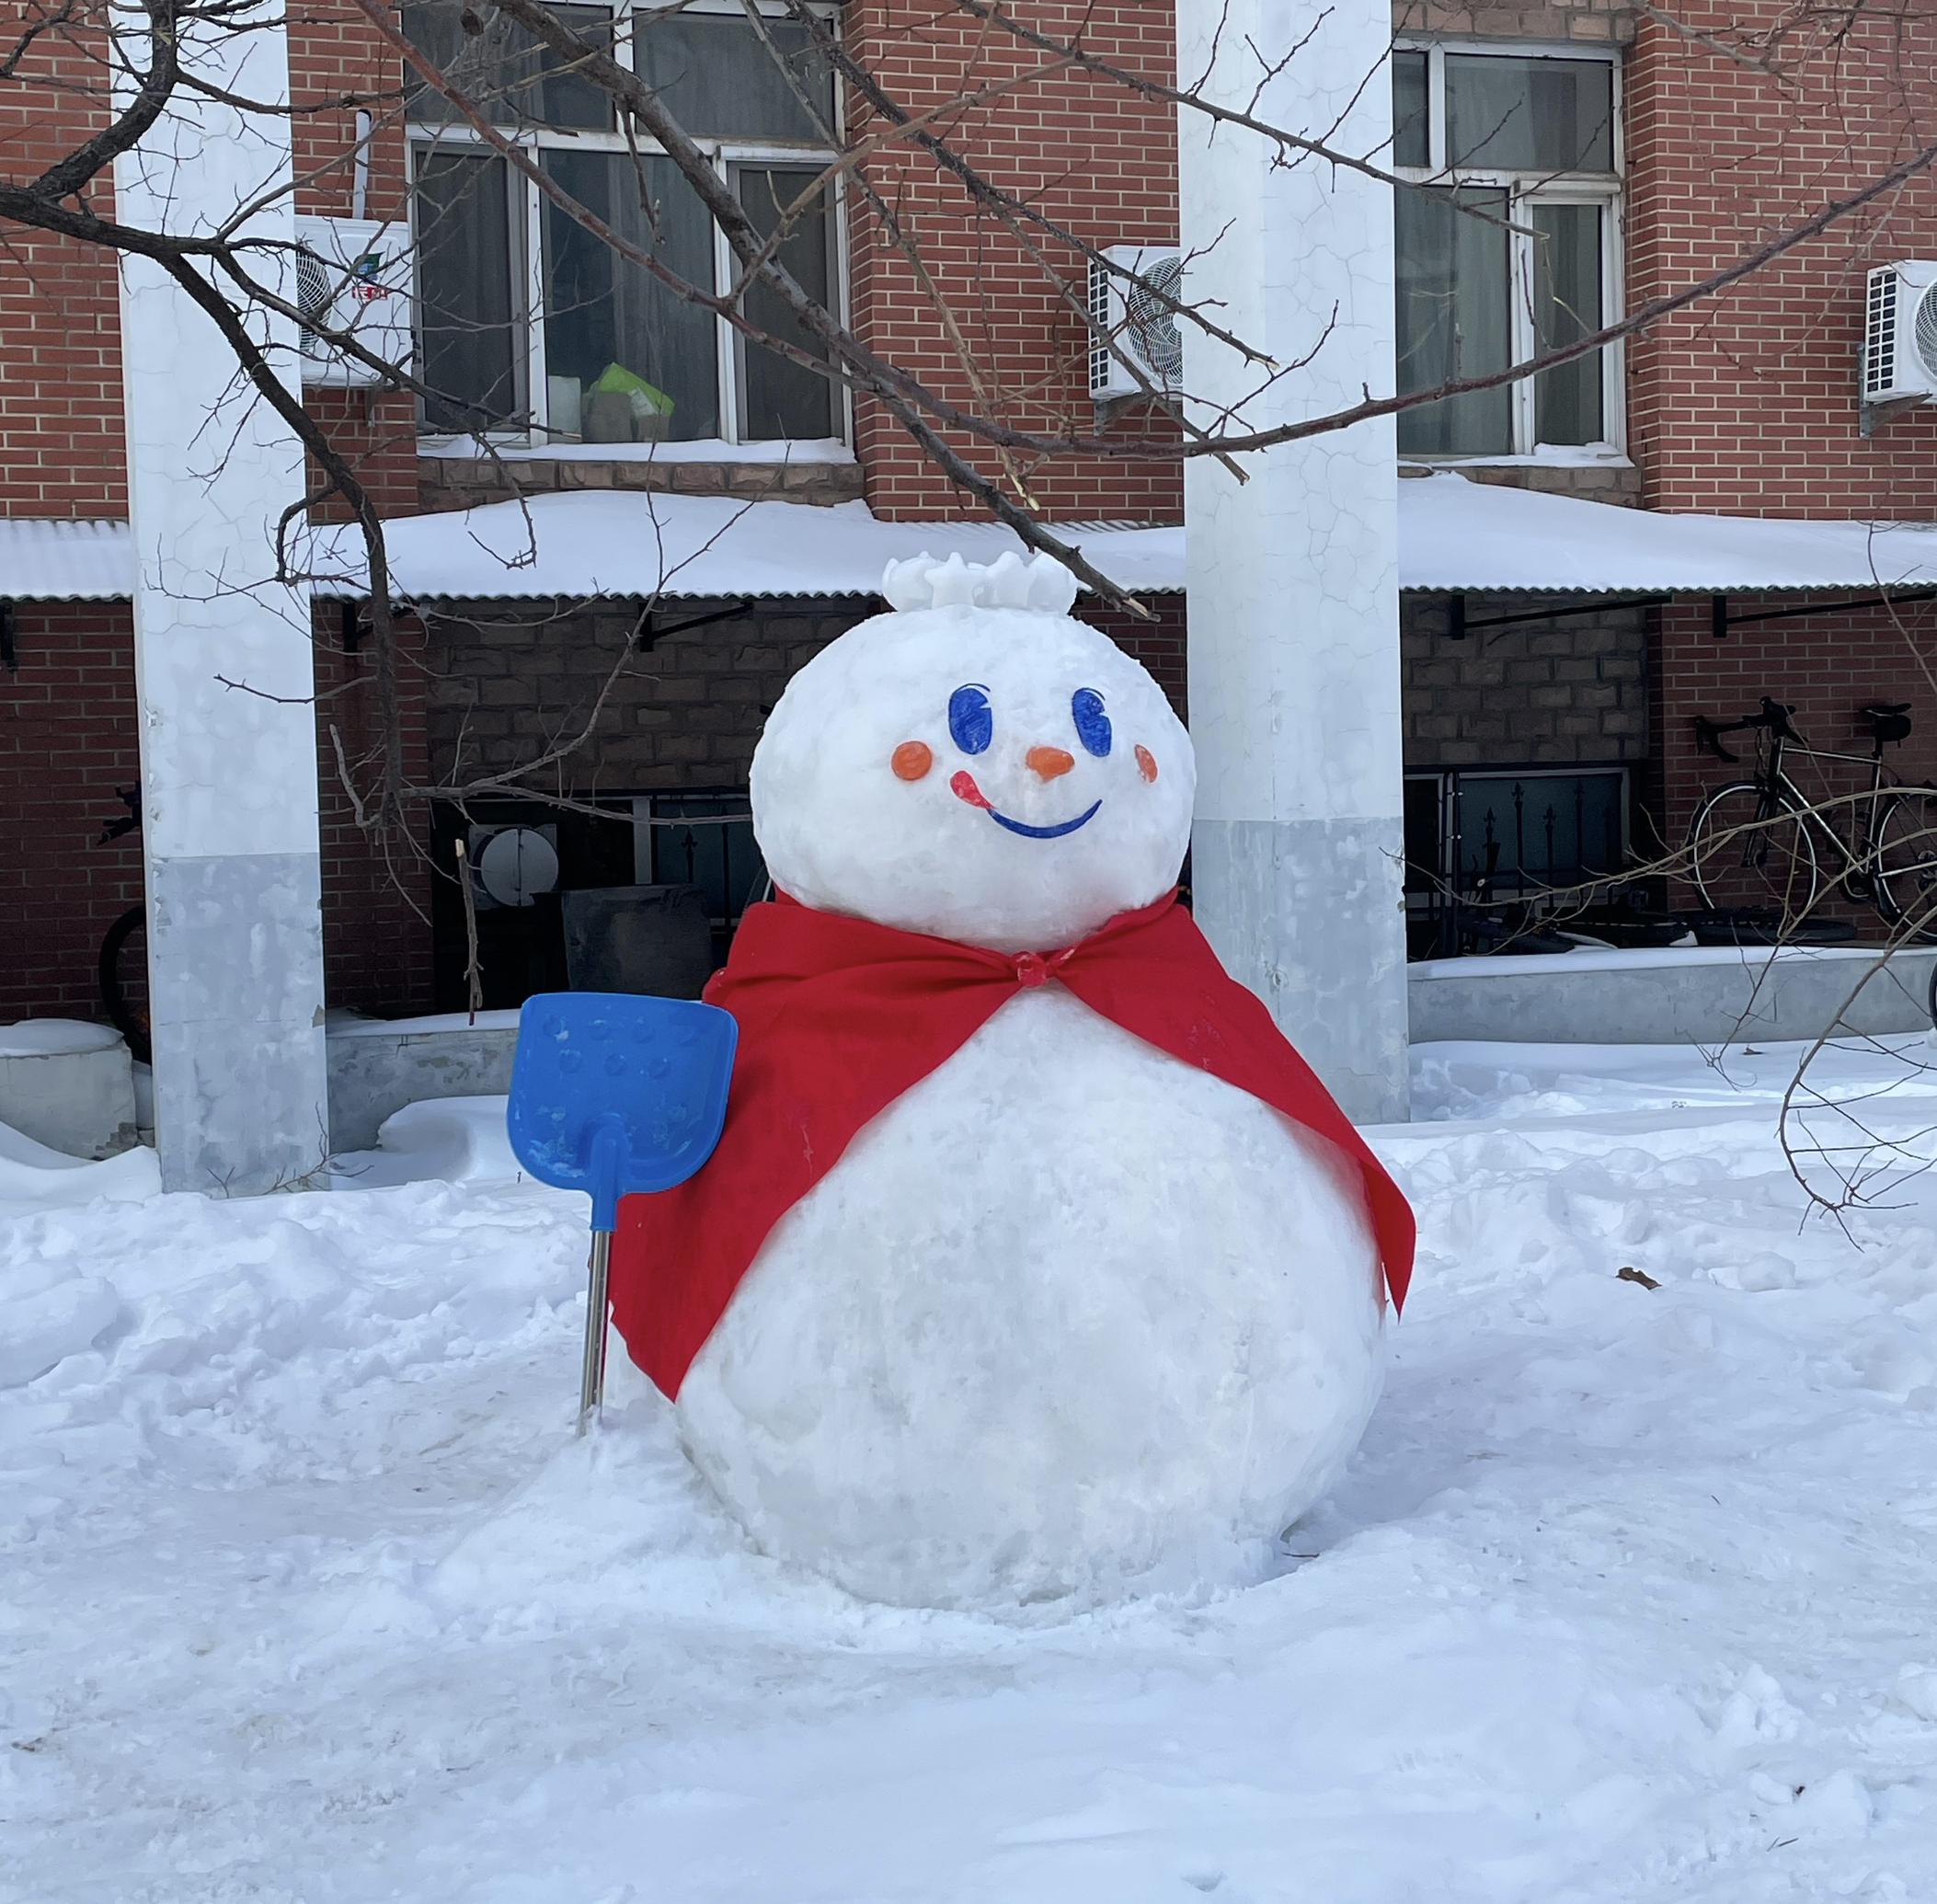 sunshine 的想法: 校园里的雪人 